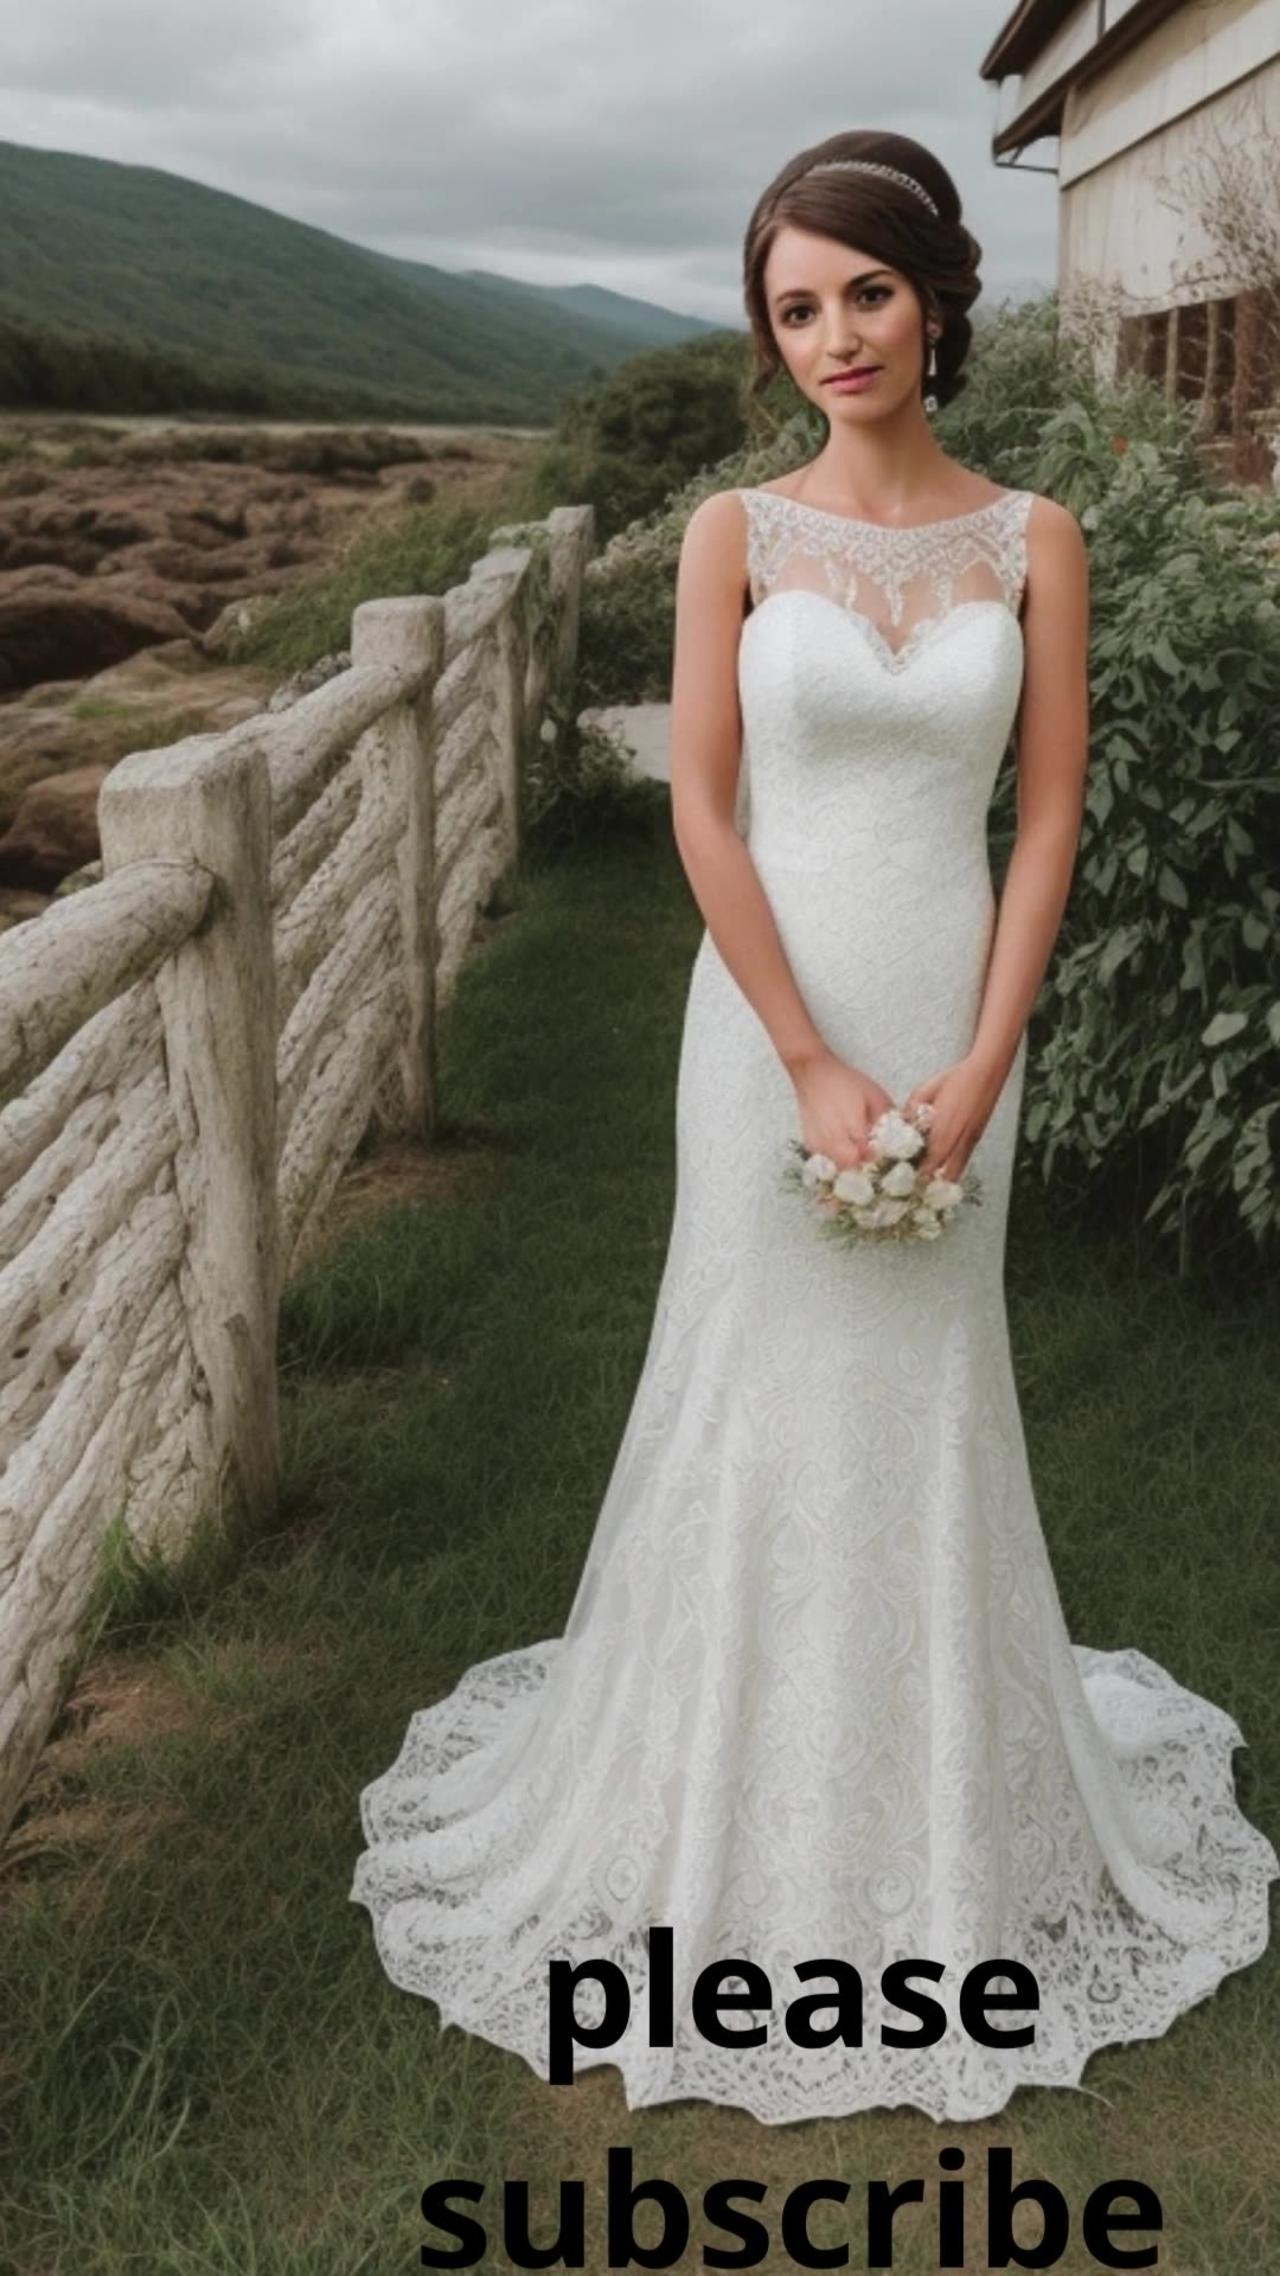 crochet wedding dress